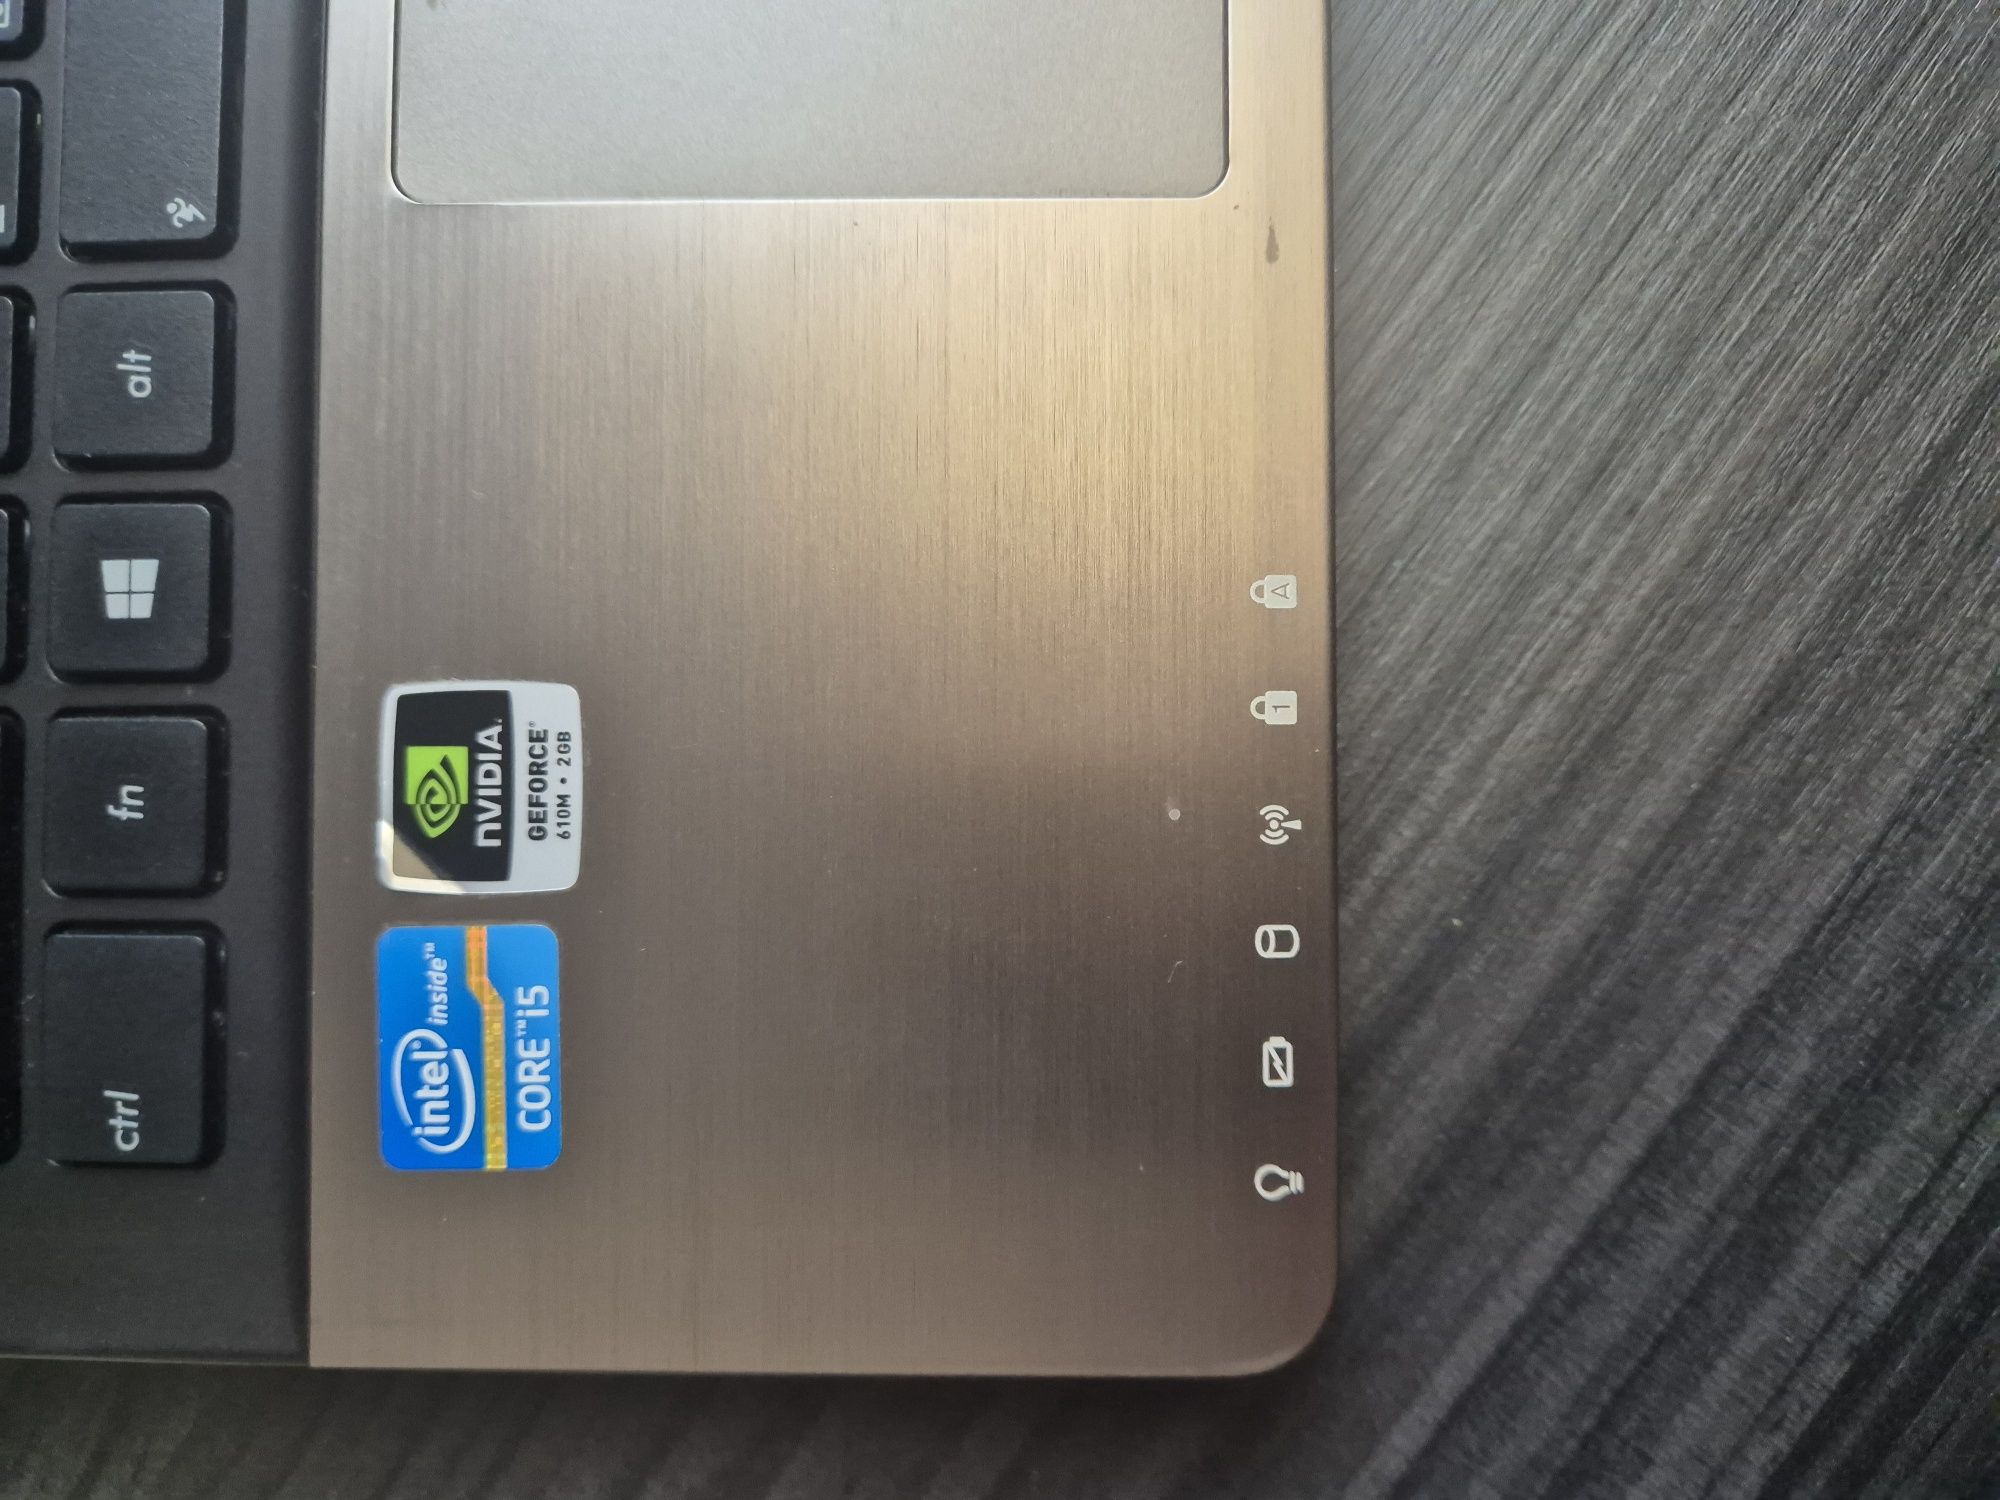 Laptop Asus r500v 15,6 " Intel Core i5 4 GB / 500 GB czarny